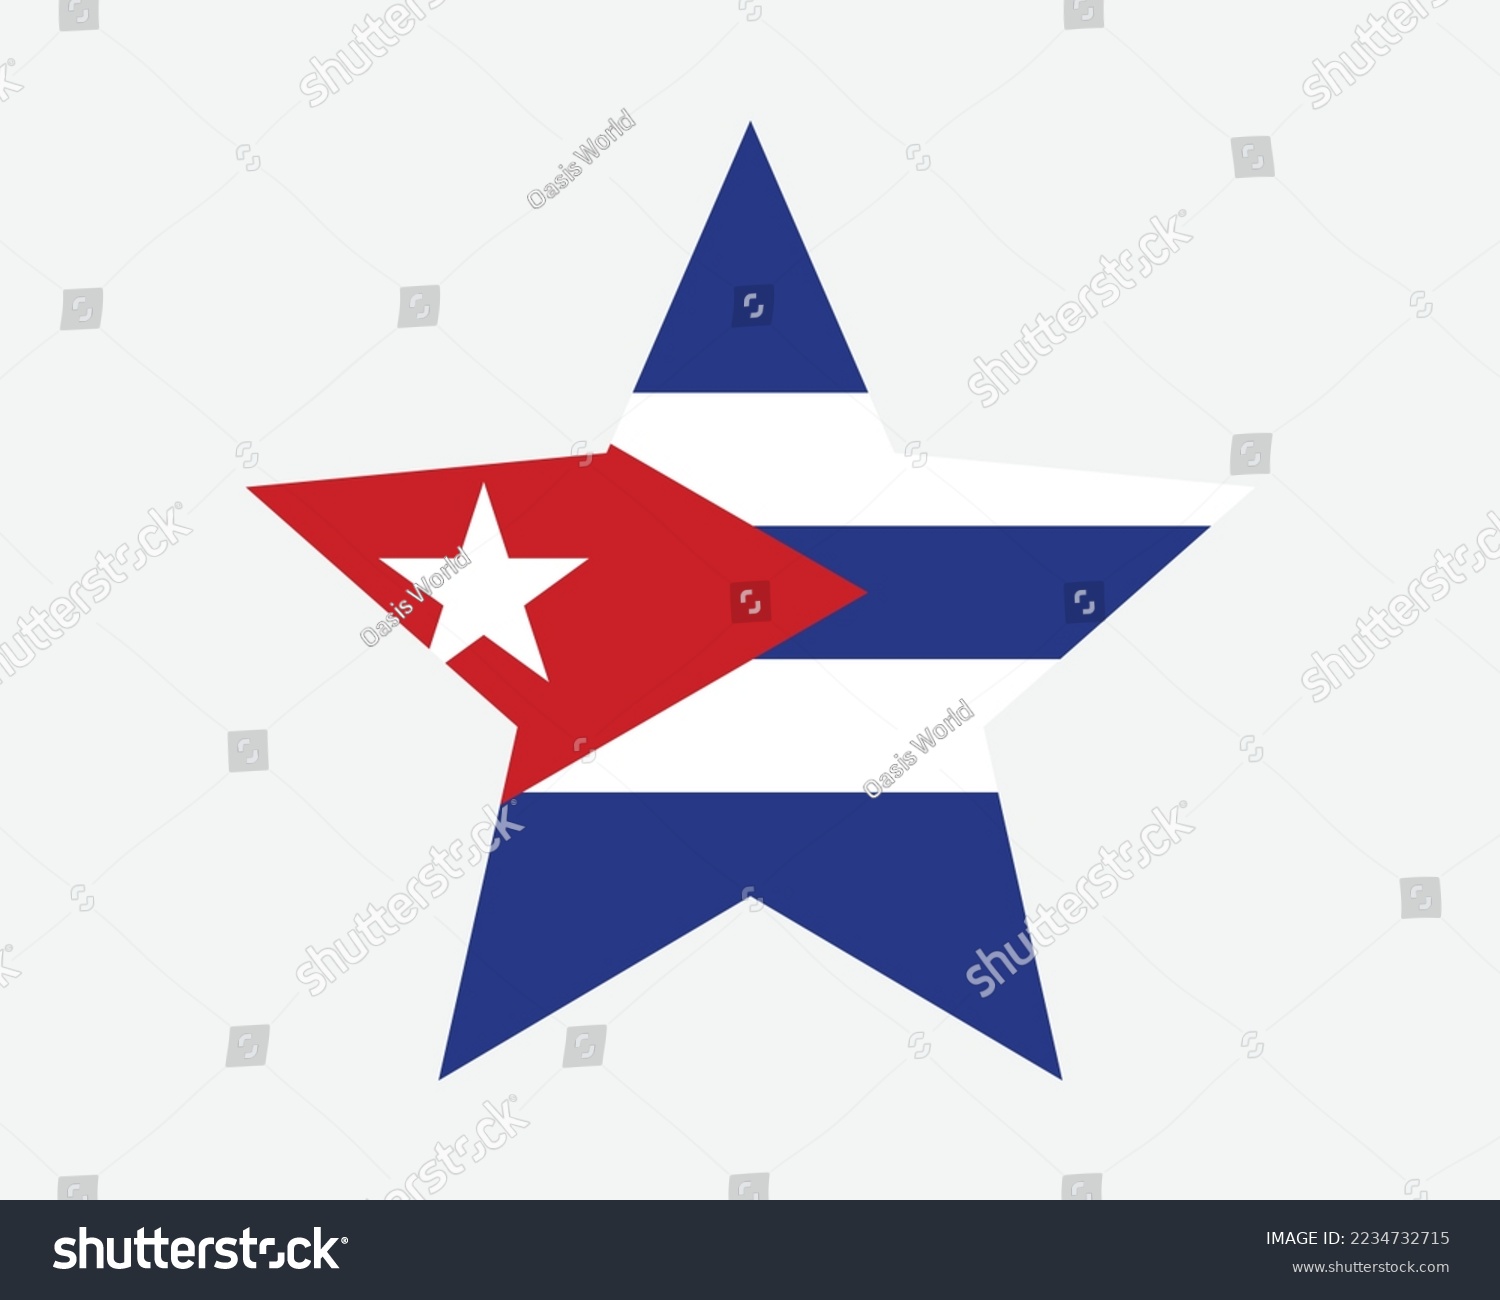 SVG of Cuba Star Flag. Cuban Star Shape Flag. Republic of Cuba Country National Banner Icon Symbol Vector 2D Flat Artwork Graphic Illustration svg